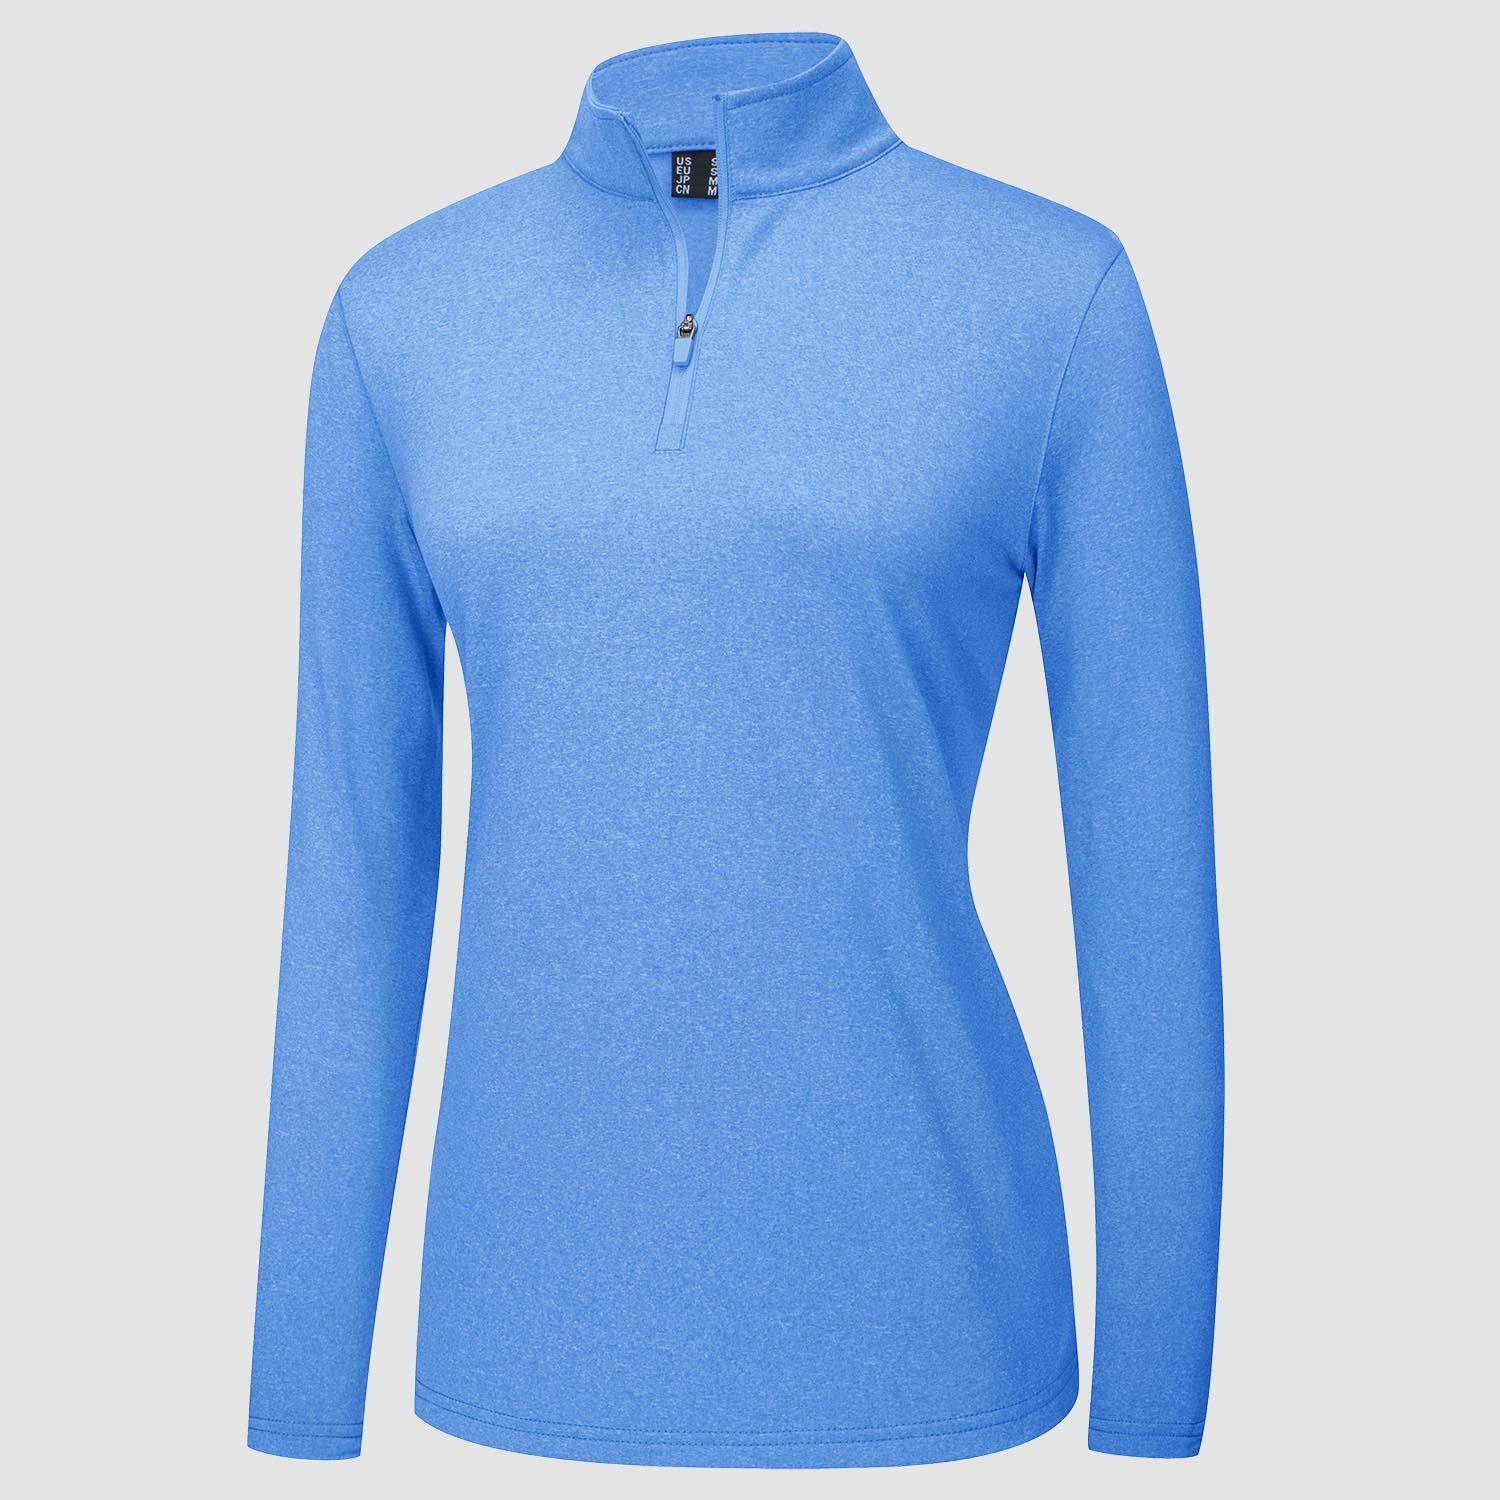 Women's Sun Protection Shirt Long Sleeve 1/4 Zip UPF50+ UV Shirts Quick Dry